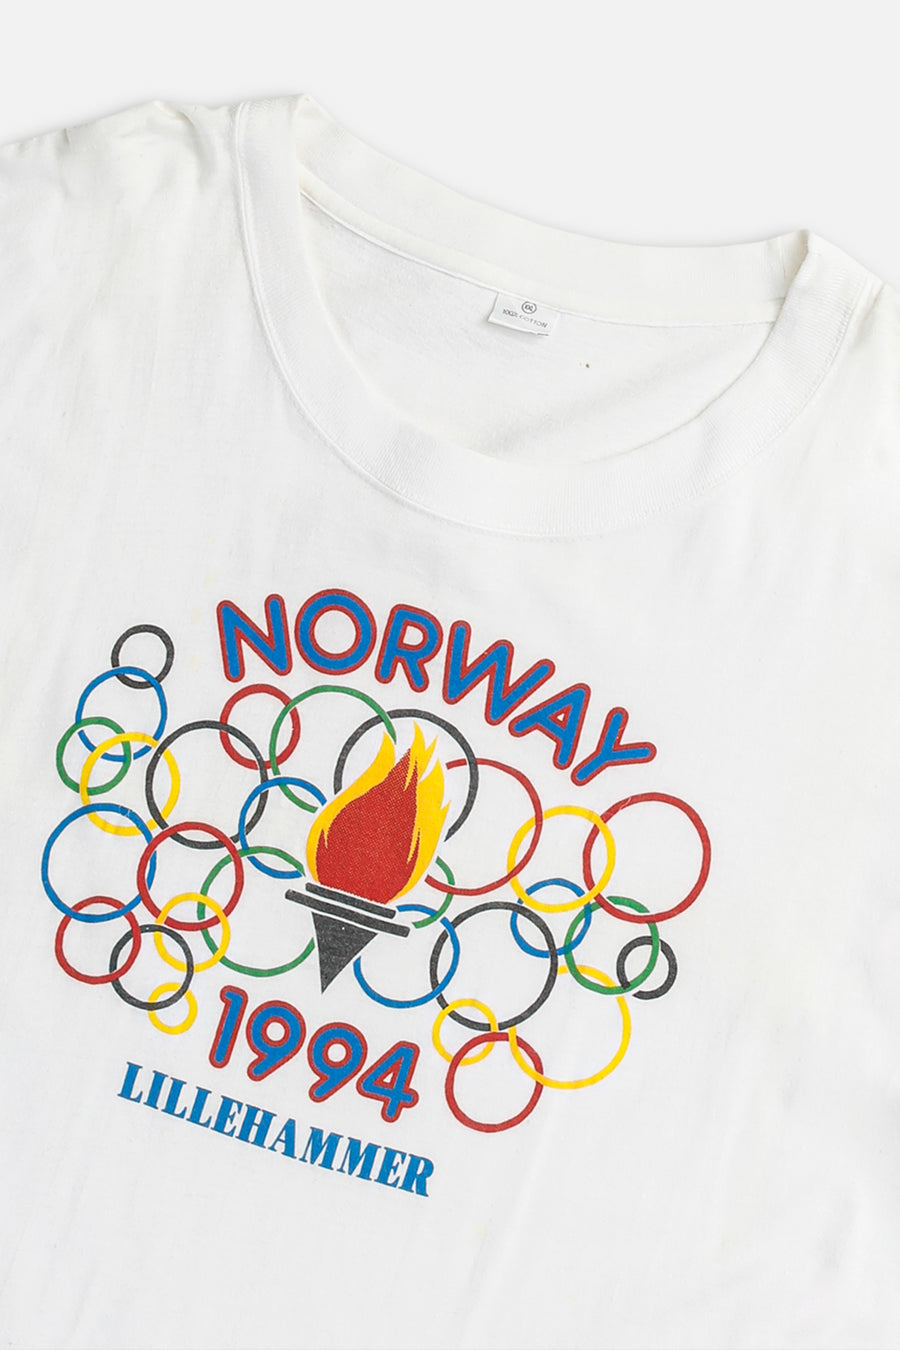 Vintage Norway Olympics 1994 Tee - M